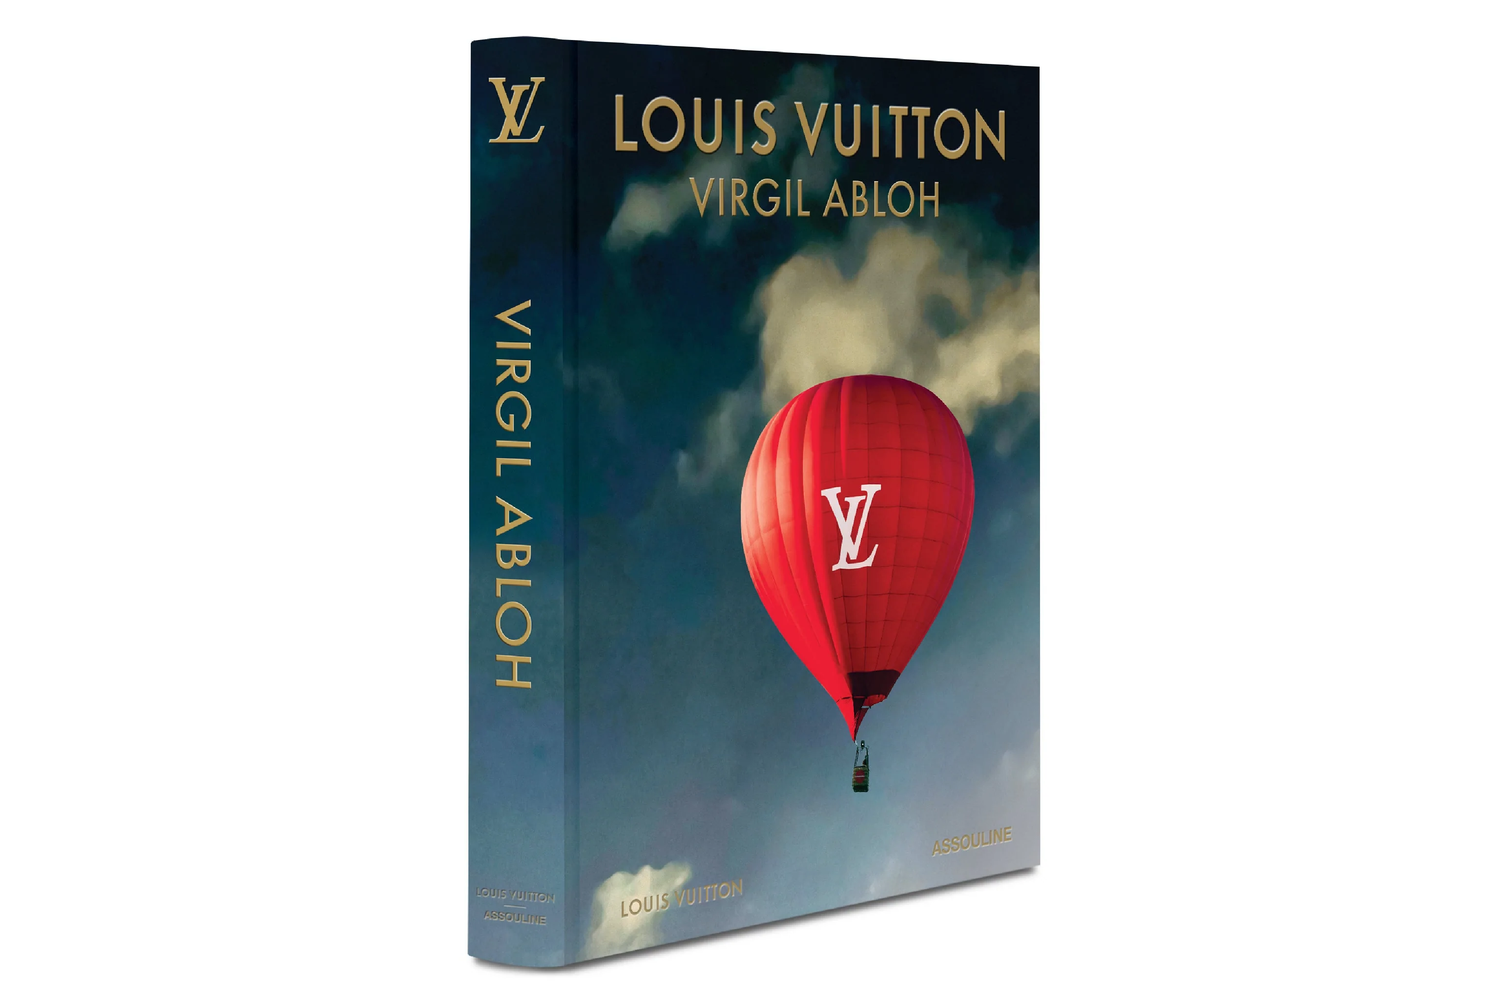 Louis Vuitton: Virgil Abloh (Classic Balloon Cover) - Must Have